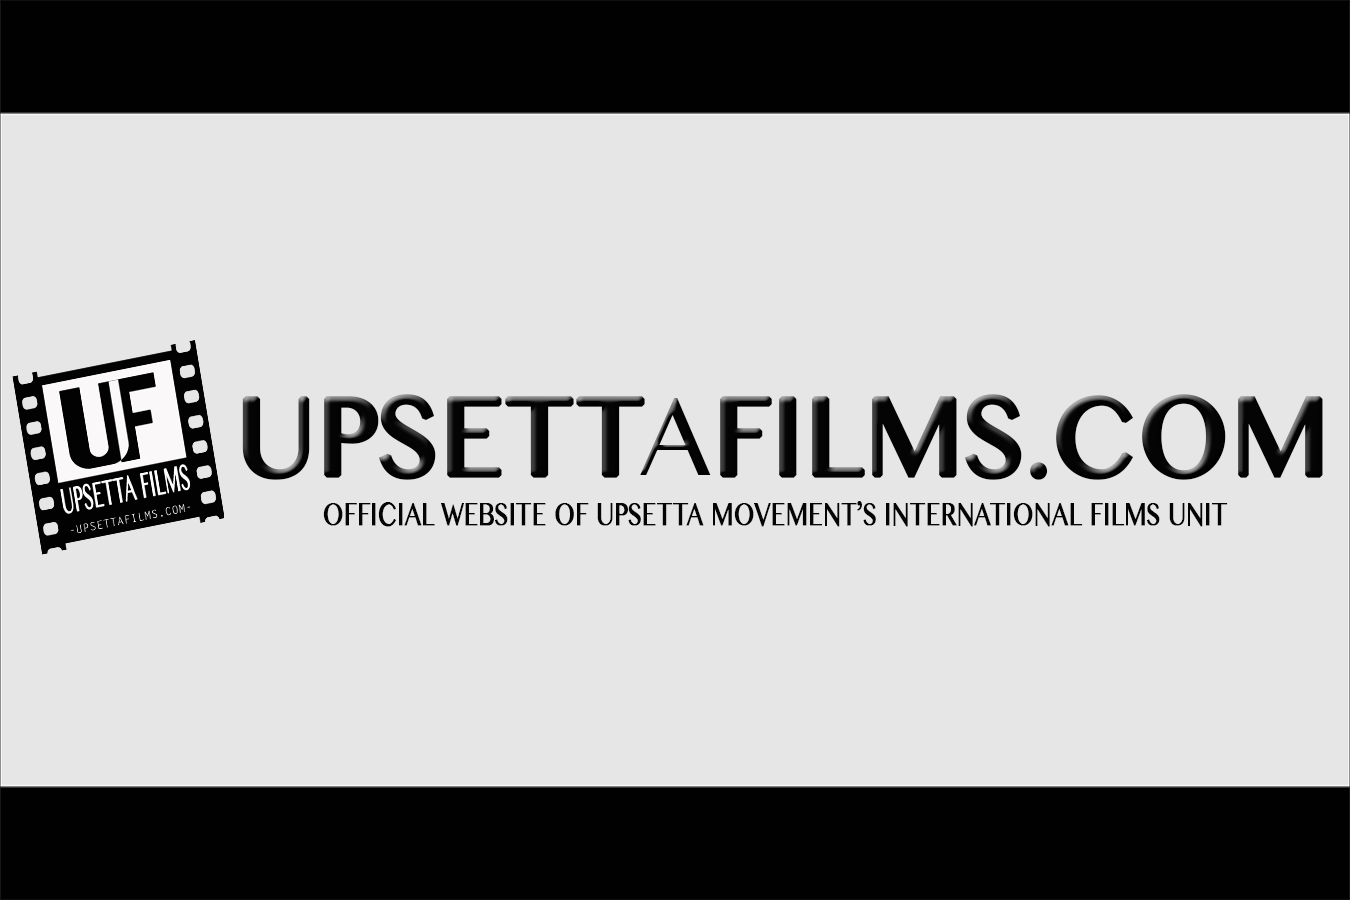 Upsetta Films New Look Logo and Website